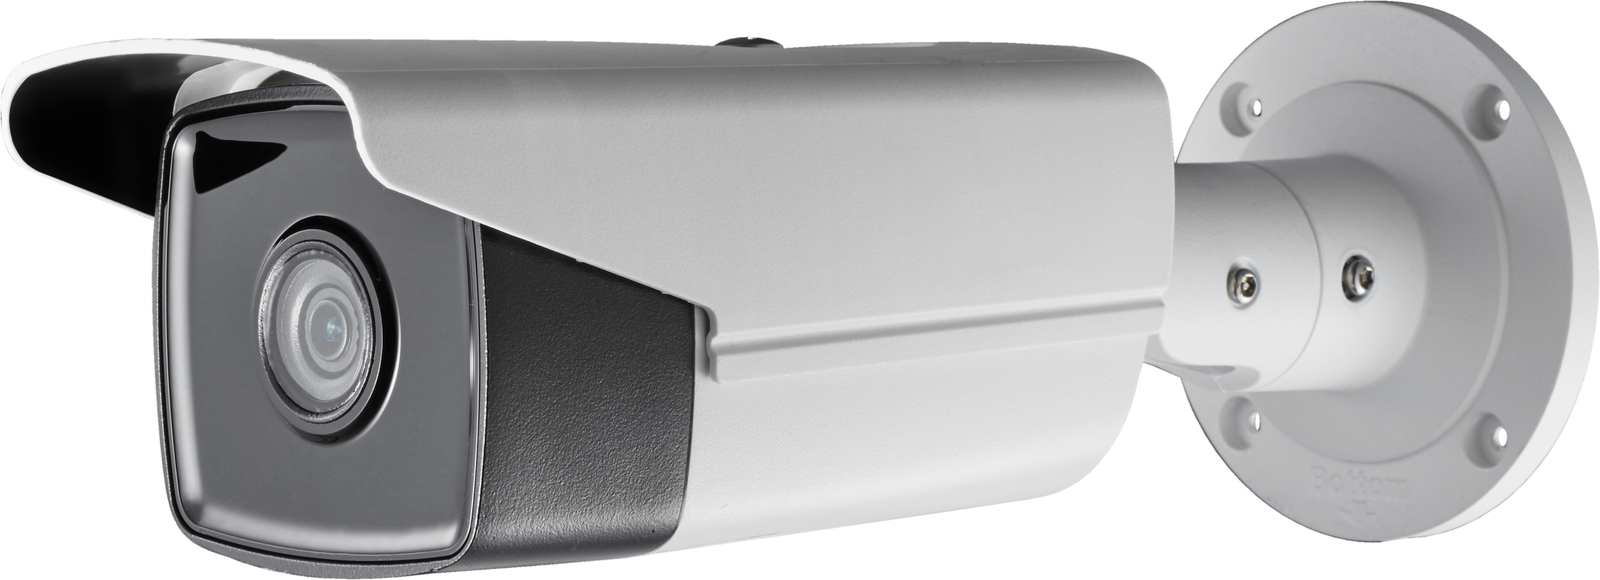 WhiteBox 2MP Bullet Indoor & outdoor 2.8mm lens optional, 120dB  WB-BT25 - eet01